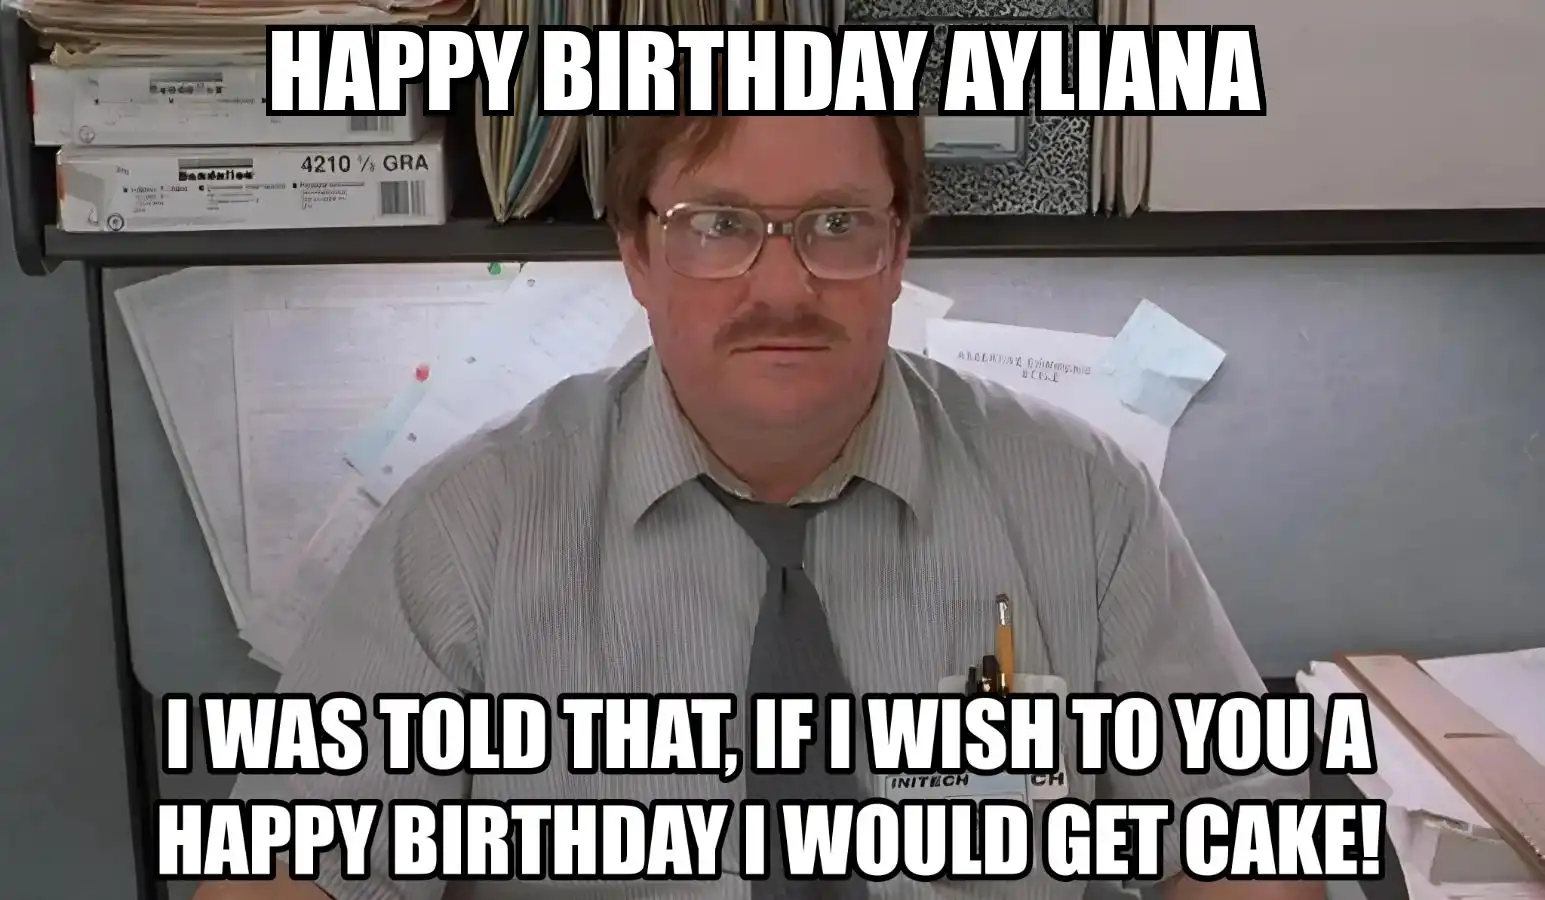 Happy Birthday Ayliana I Would Get A Cake Meme